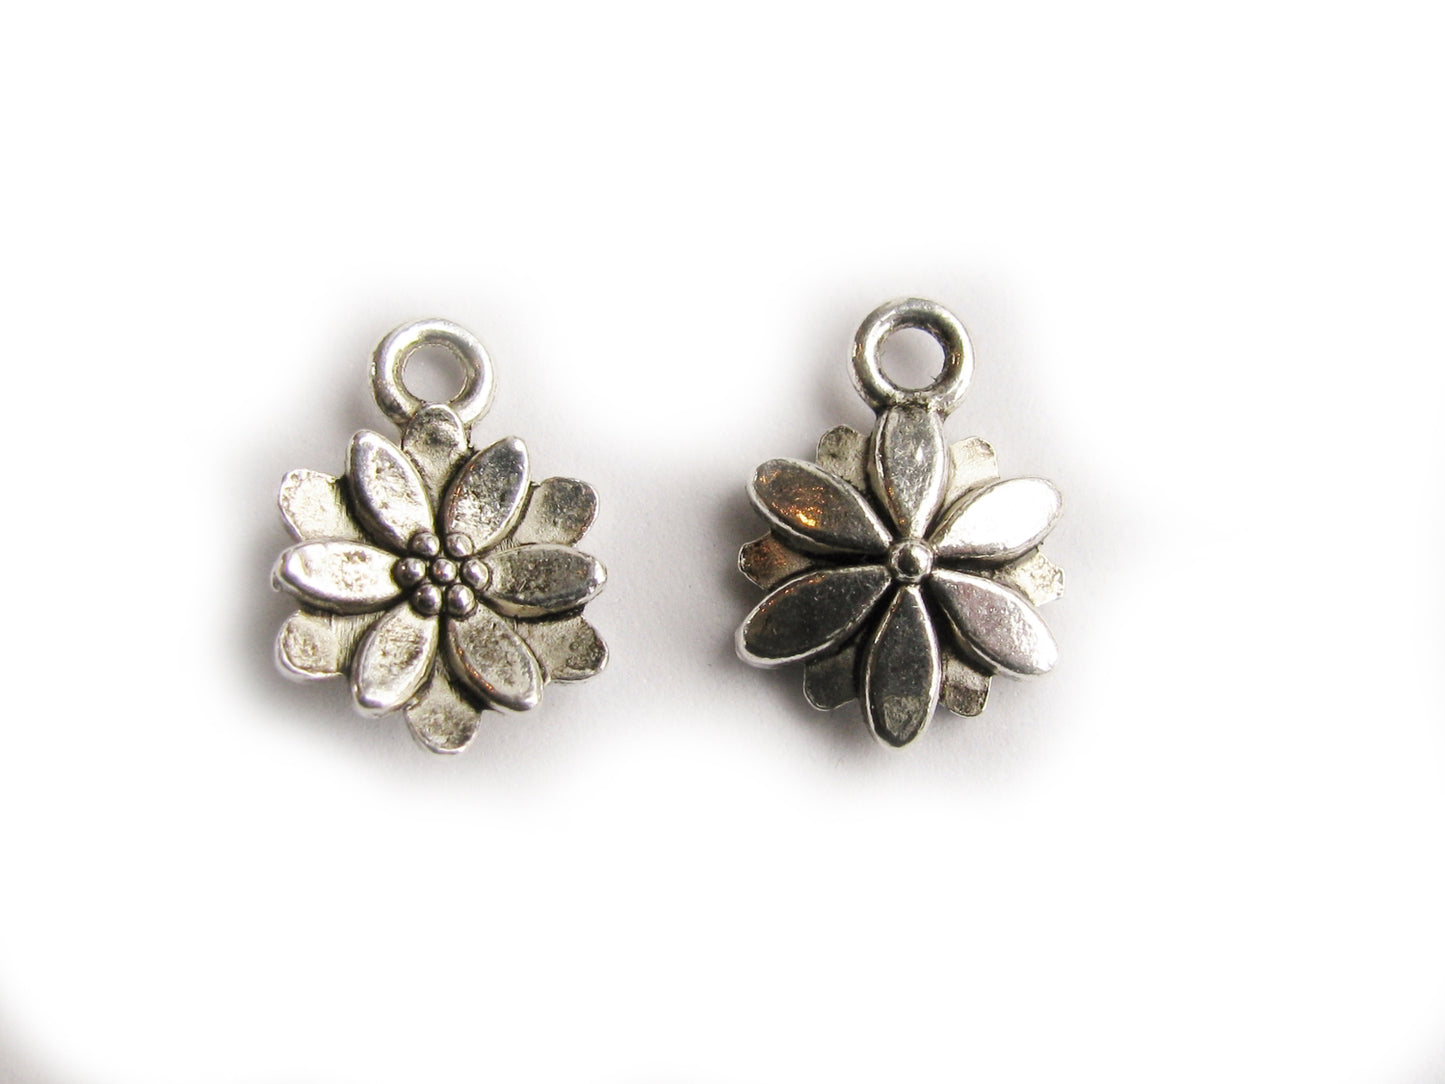 20 Metallanhänger Blume, silberfarben, 1,4cm, Anhänger Blüte, Perlen basteln